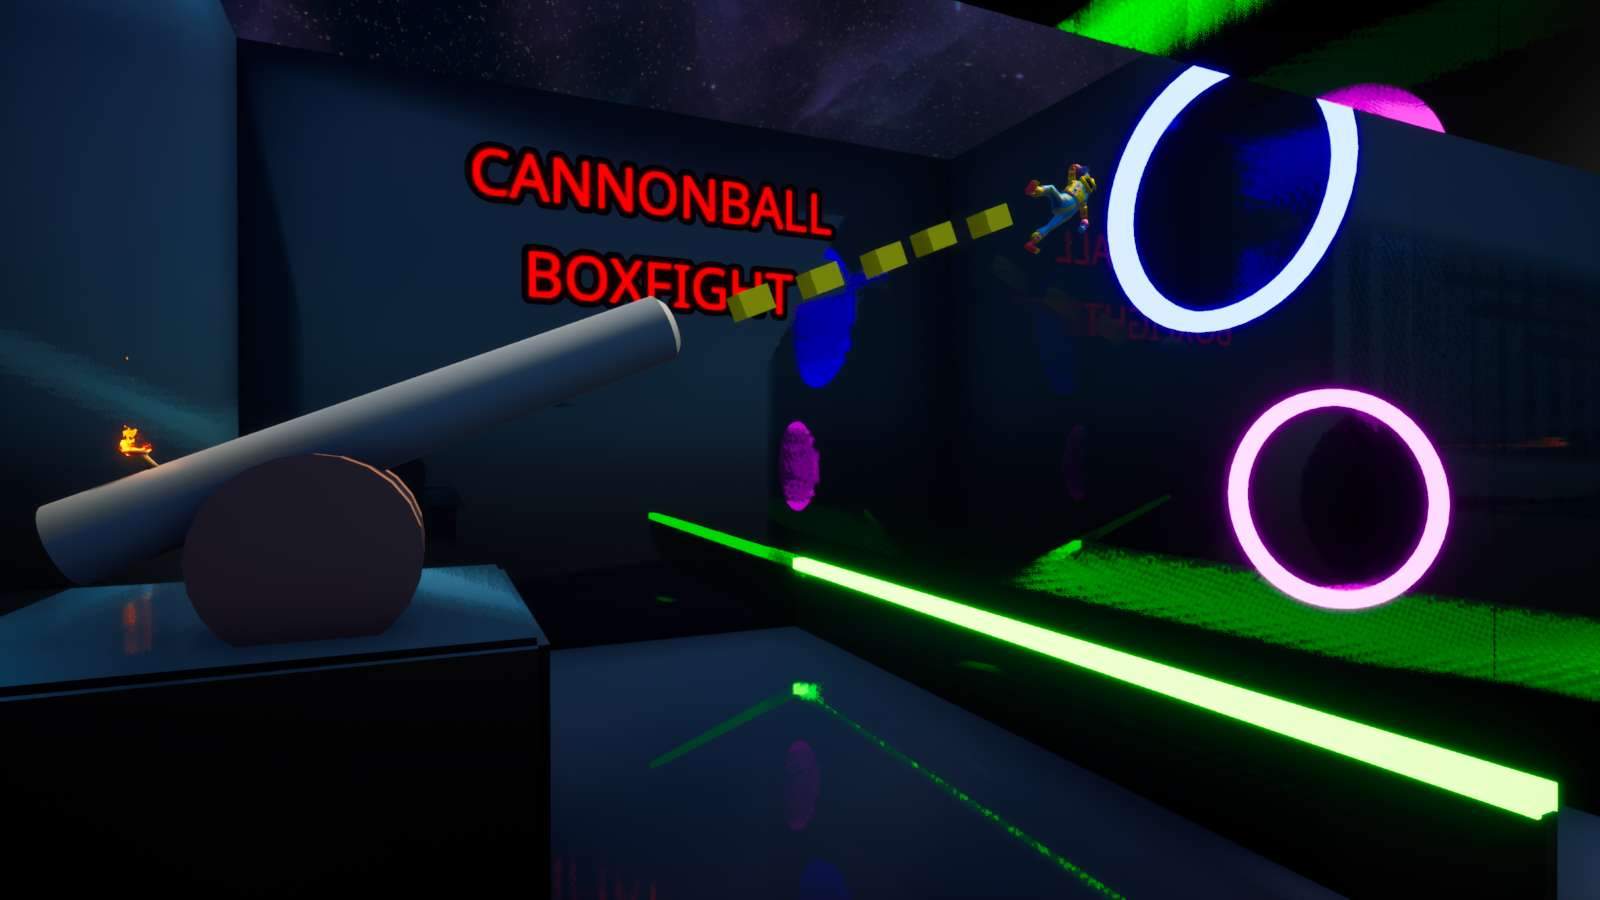 Cannonball Boxfight